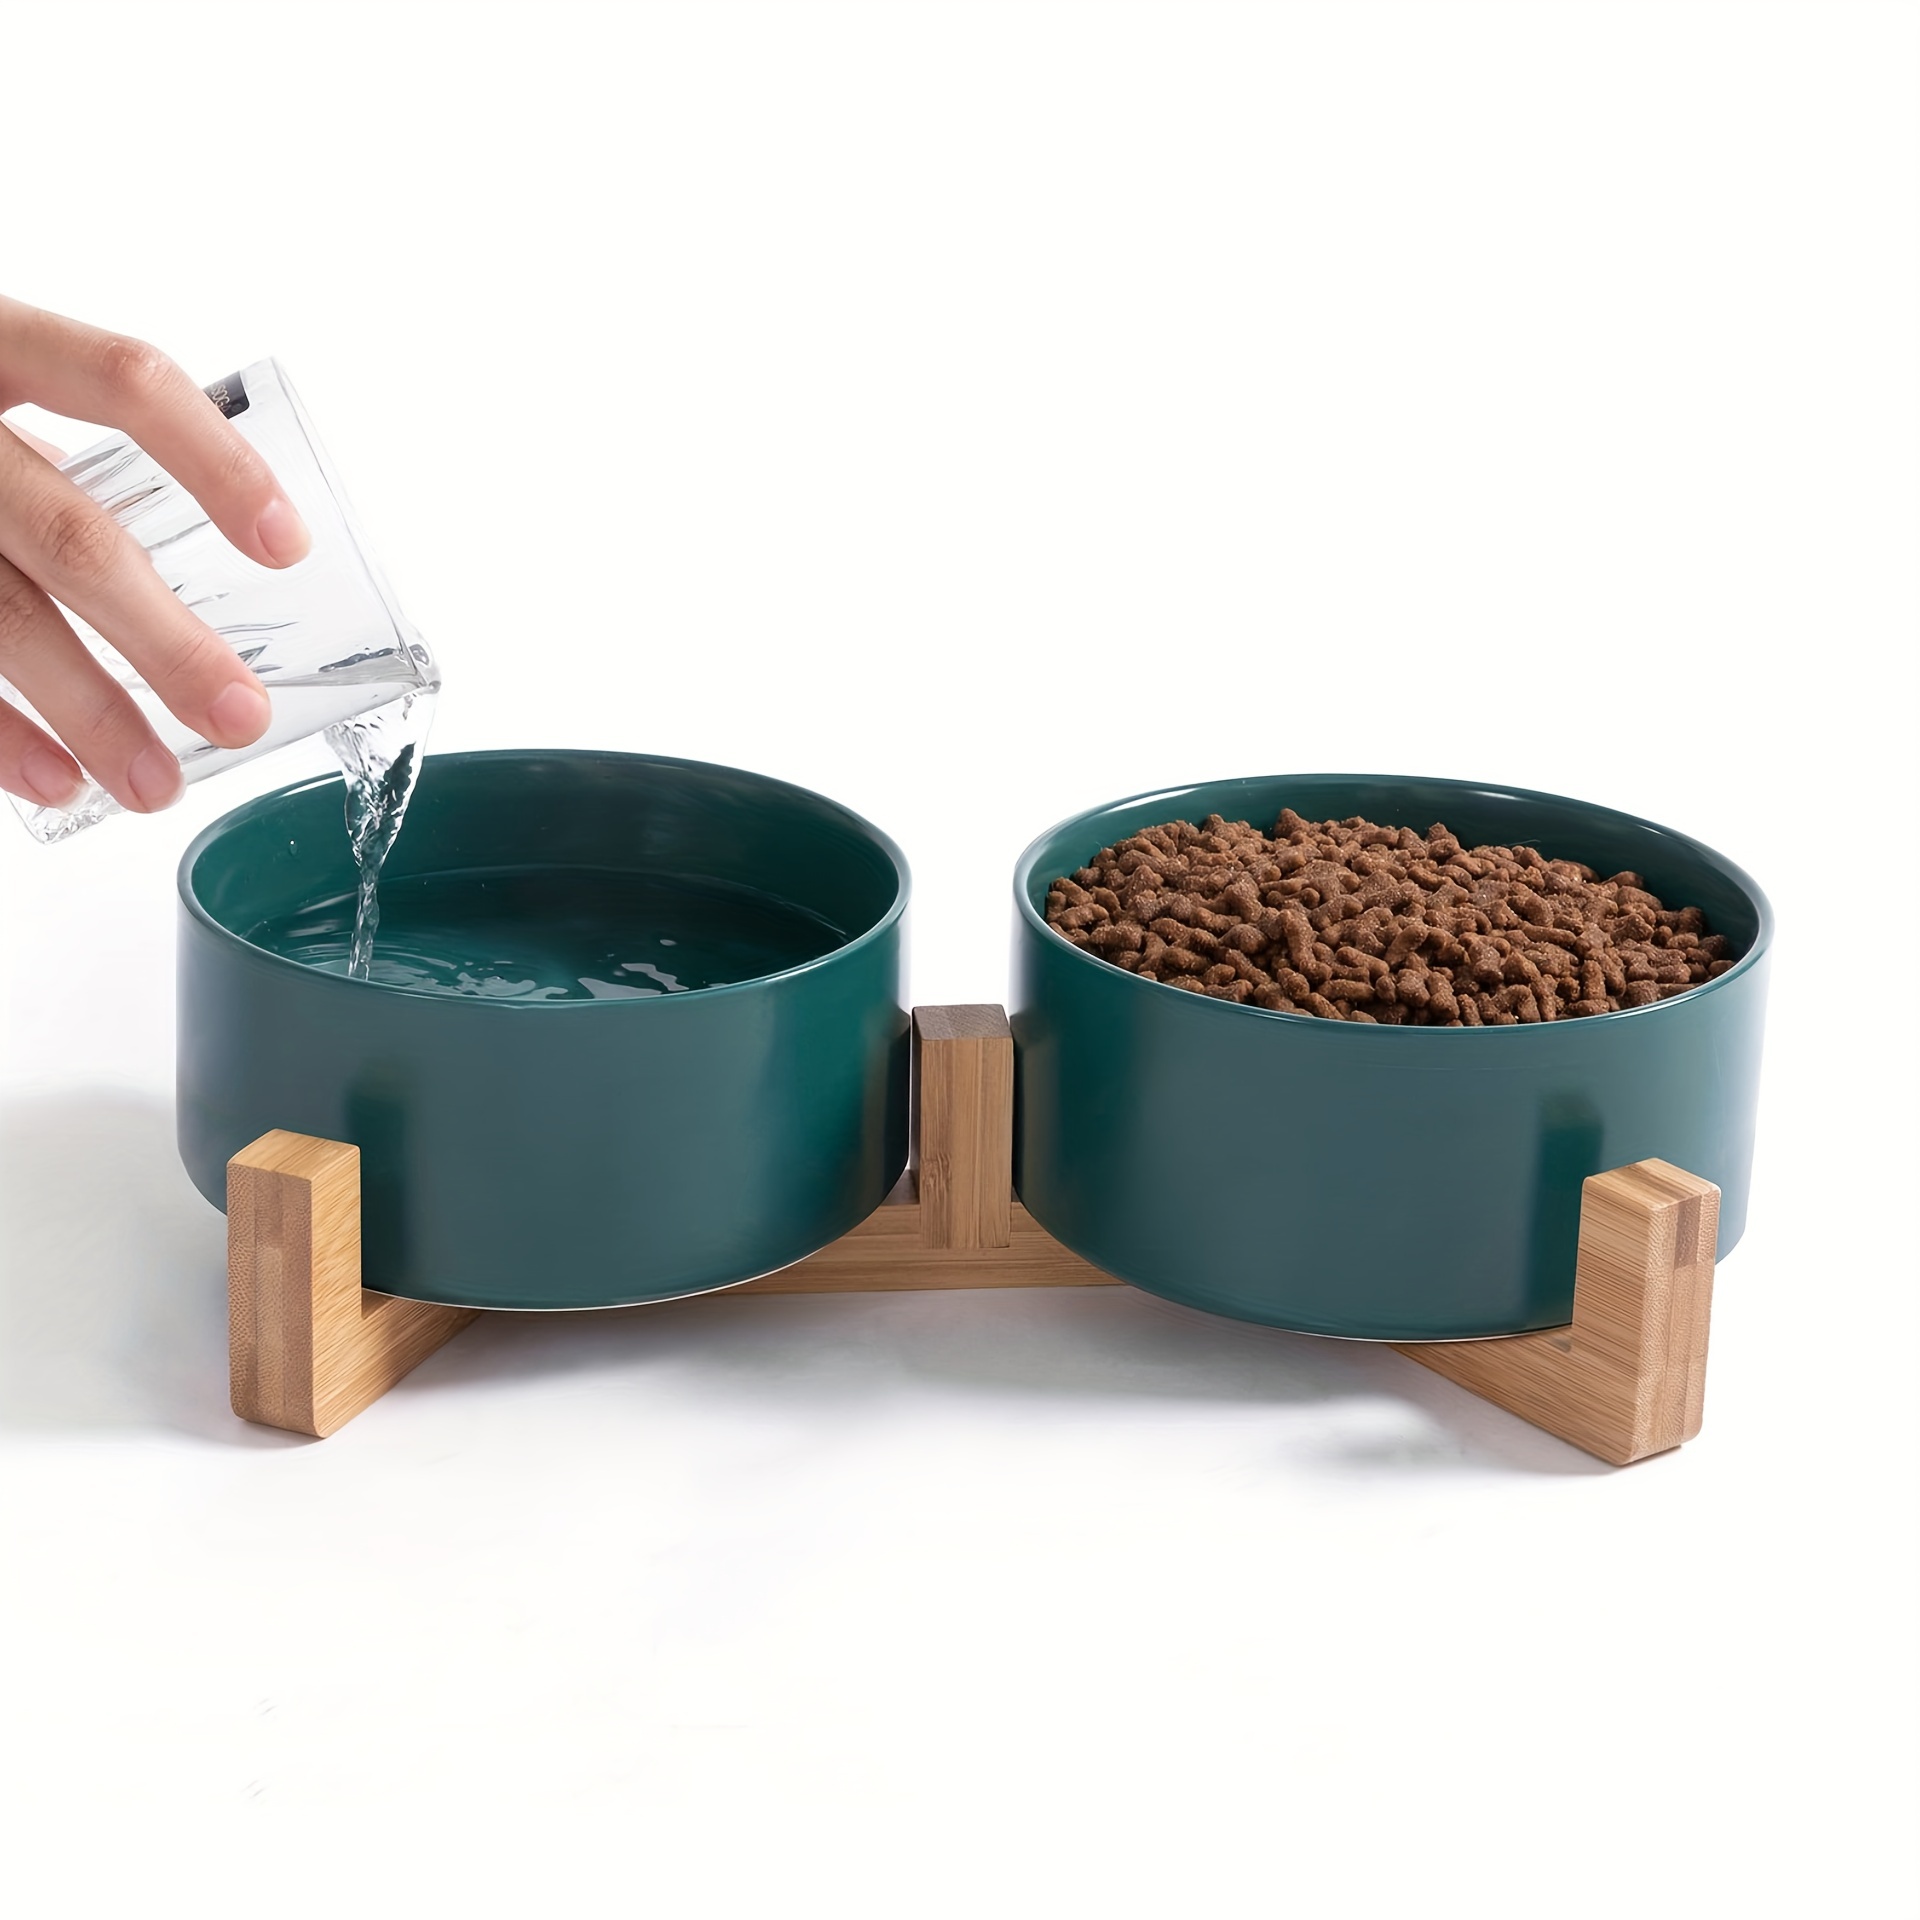 Ceramic Pet Cat Puppy Feeding Product, Ceramic Food Water Bowl